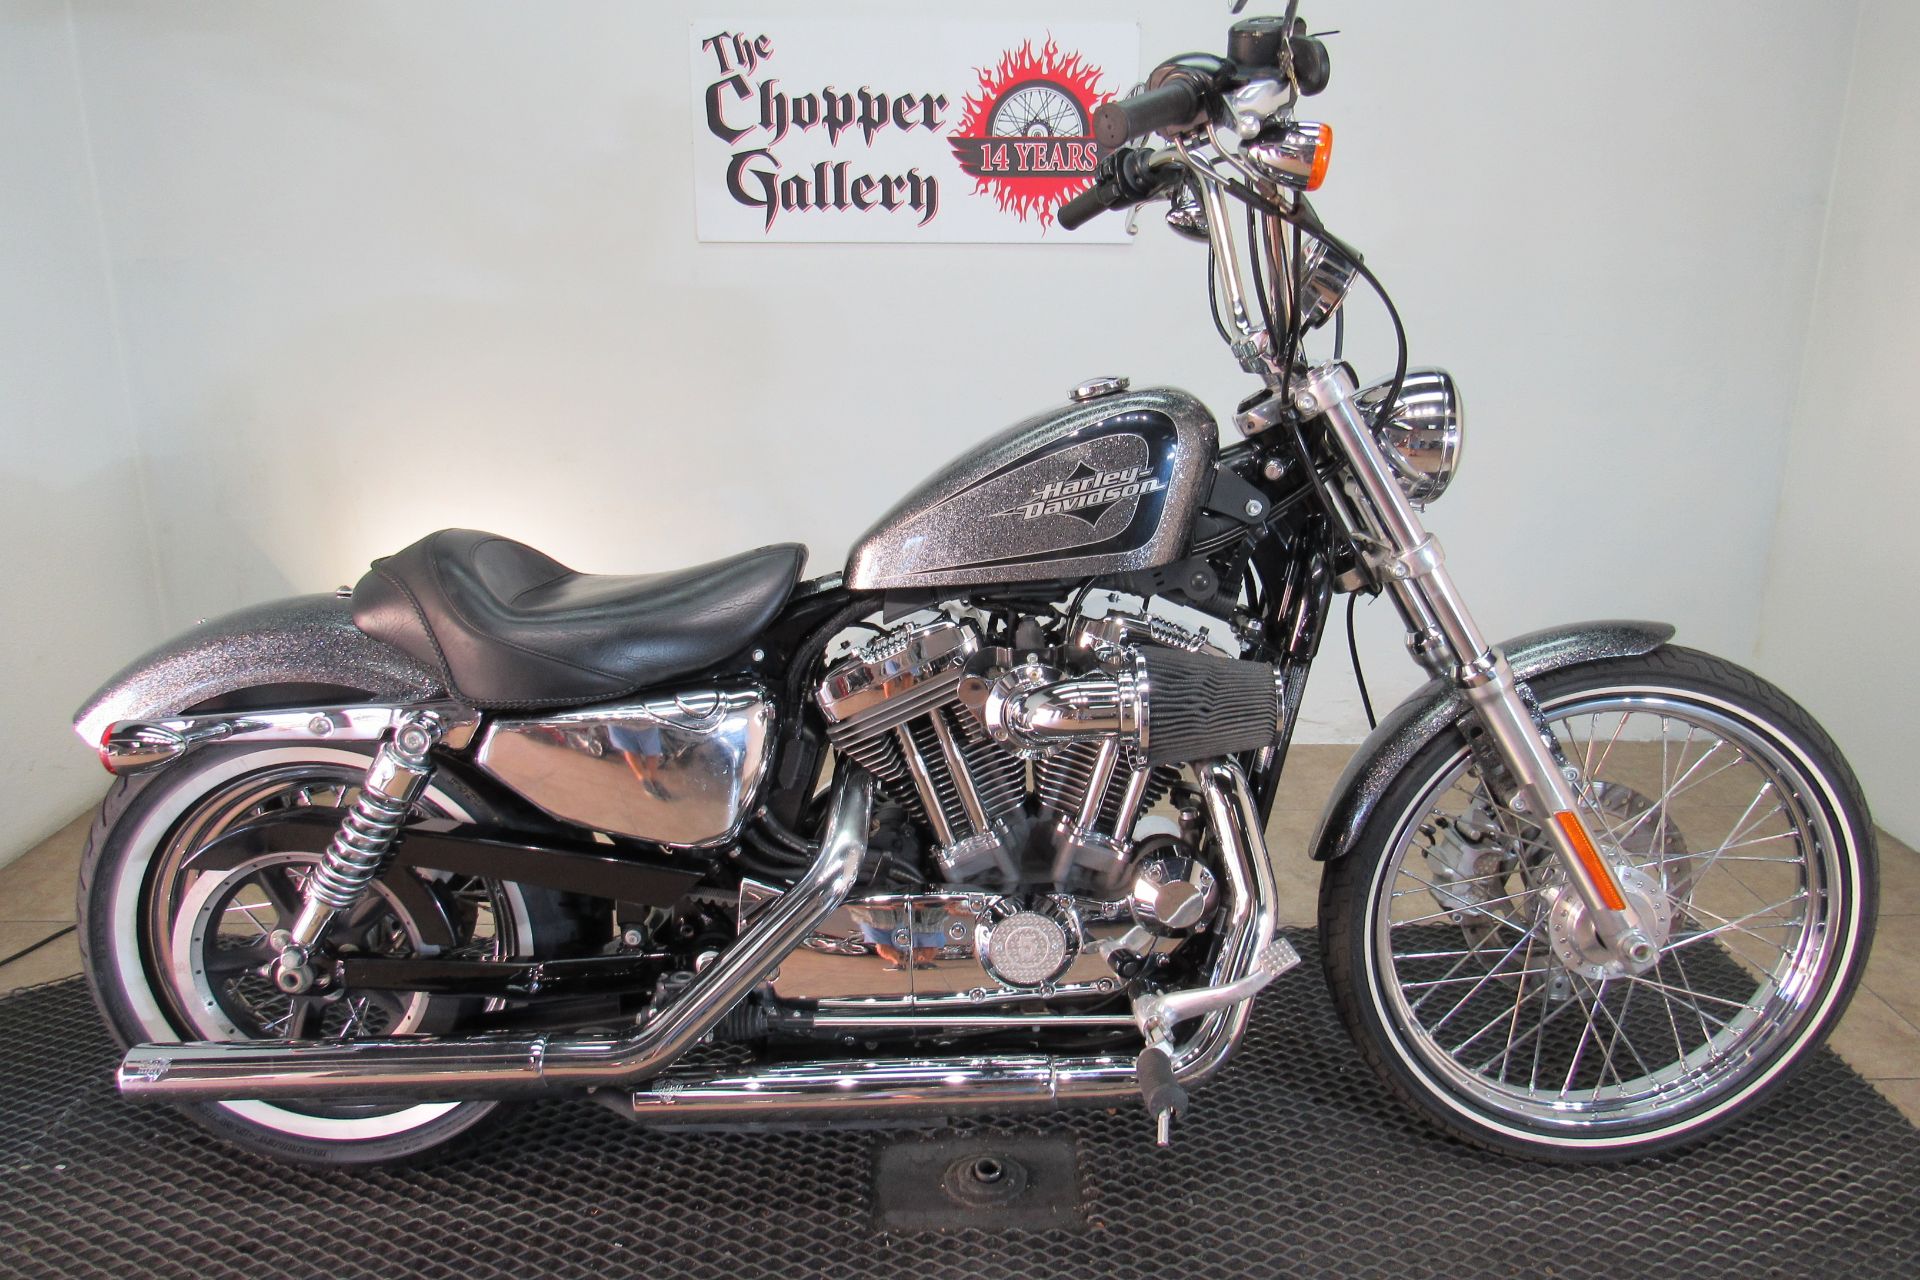 2014 Harley-Davidson Sportster® Seventy-Two® in Temecula, California - Photo 1